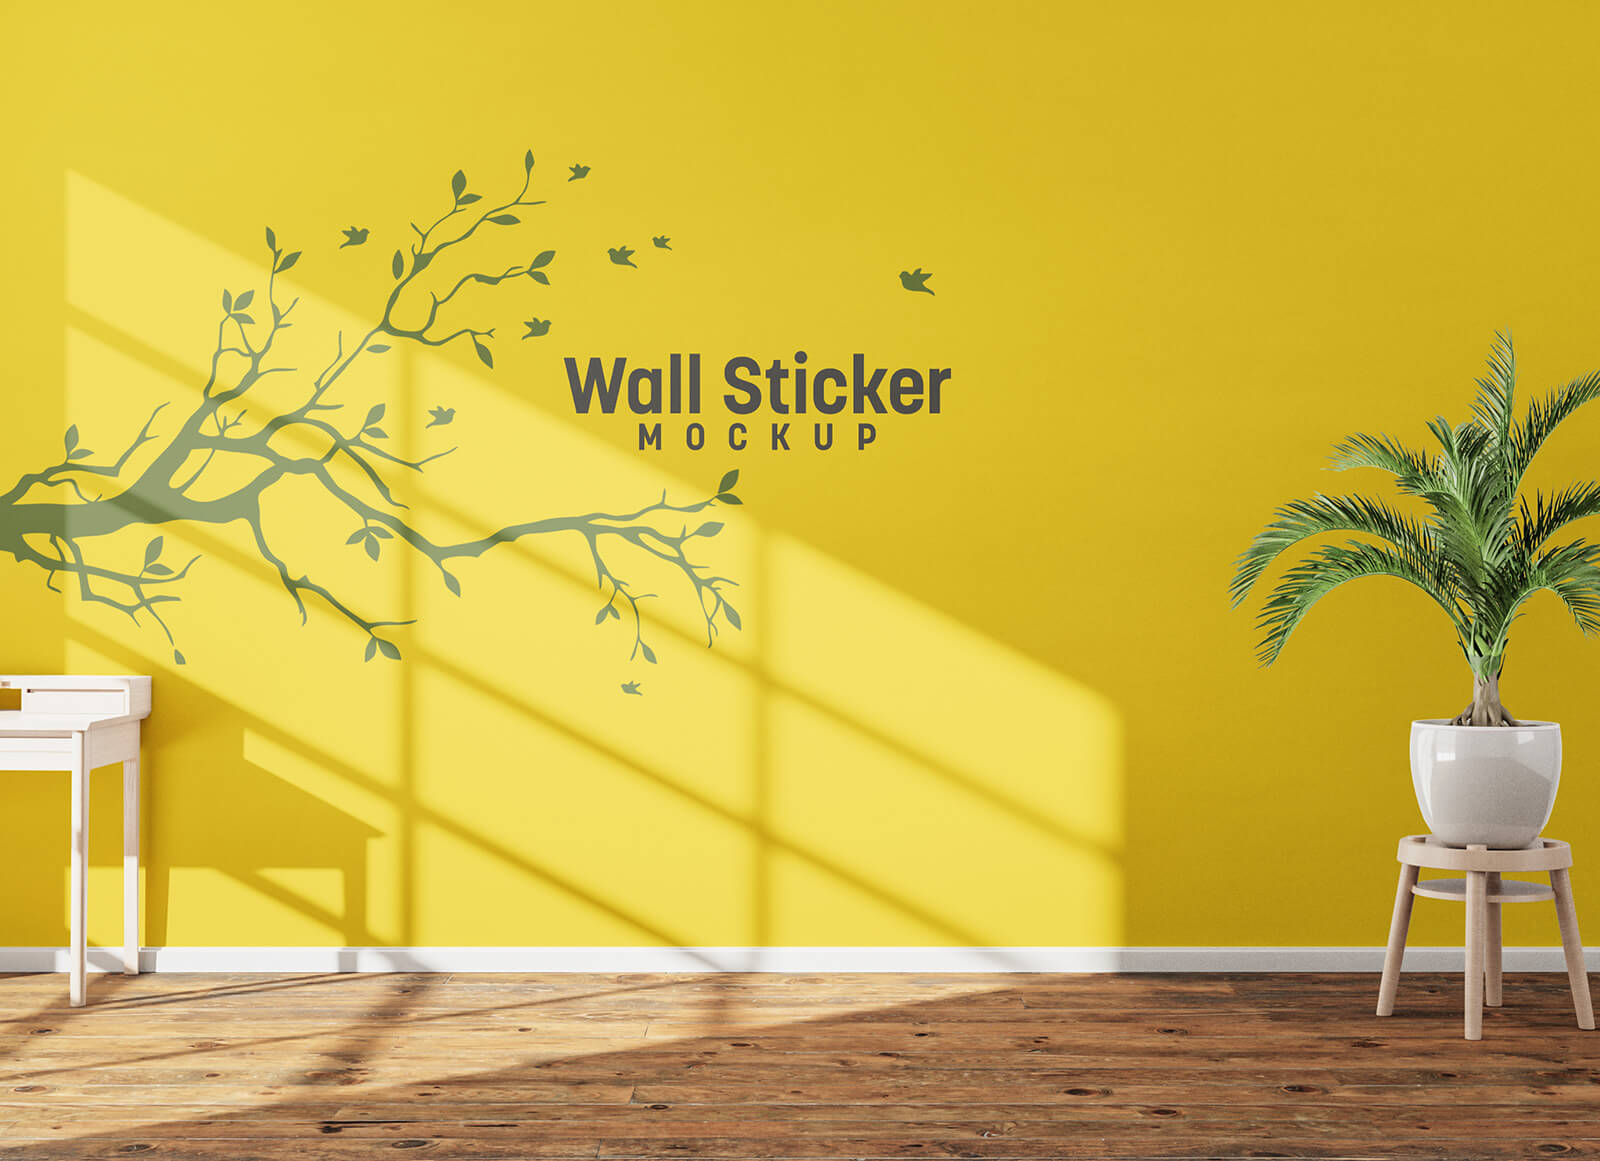 Free-Room-Wall-Sticker-Decal-Mockup-PSD